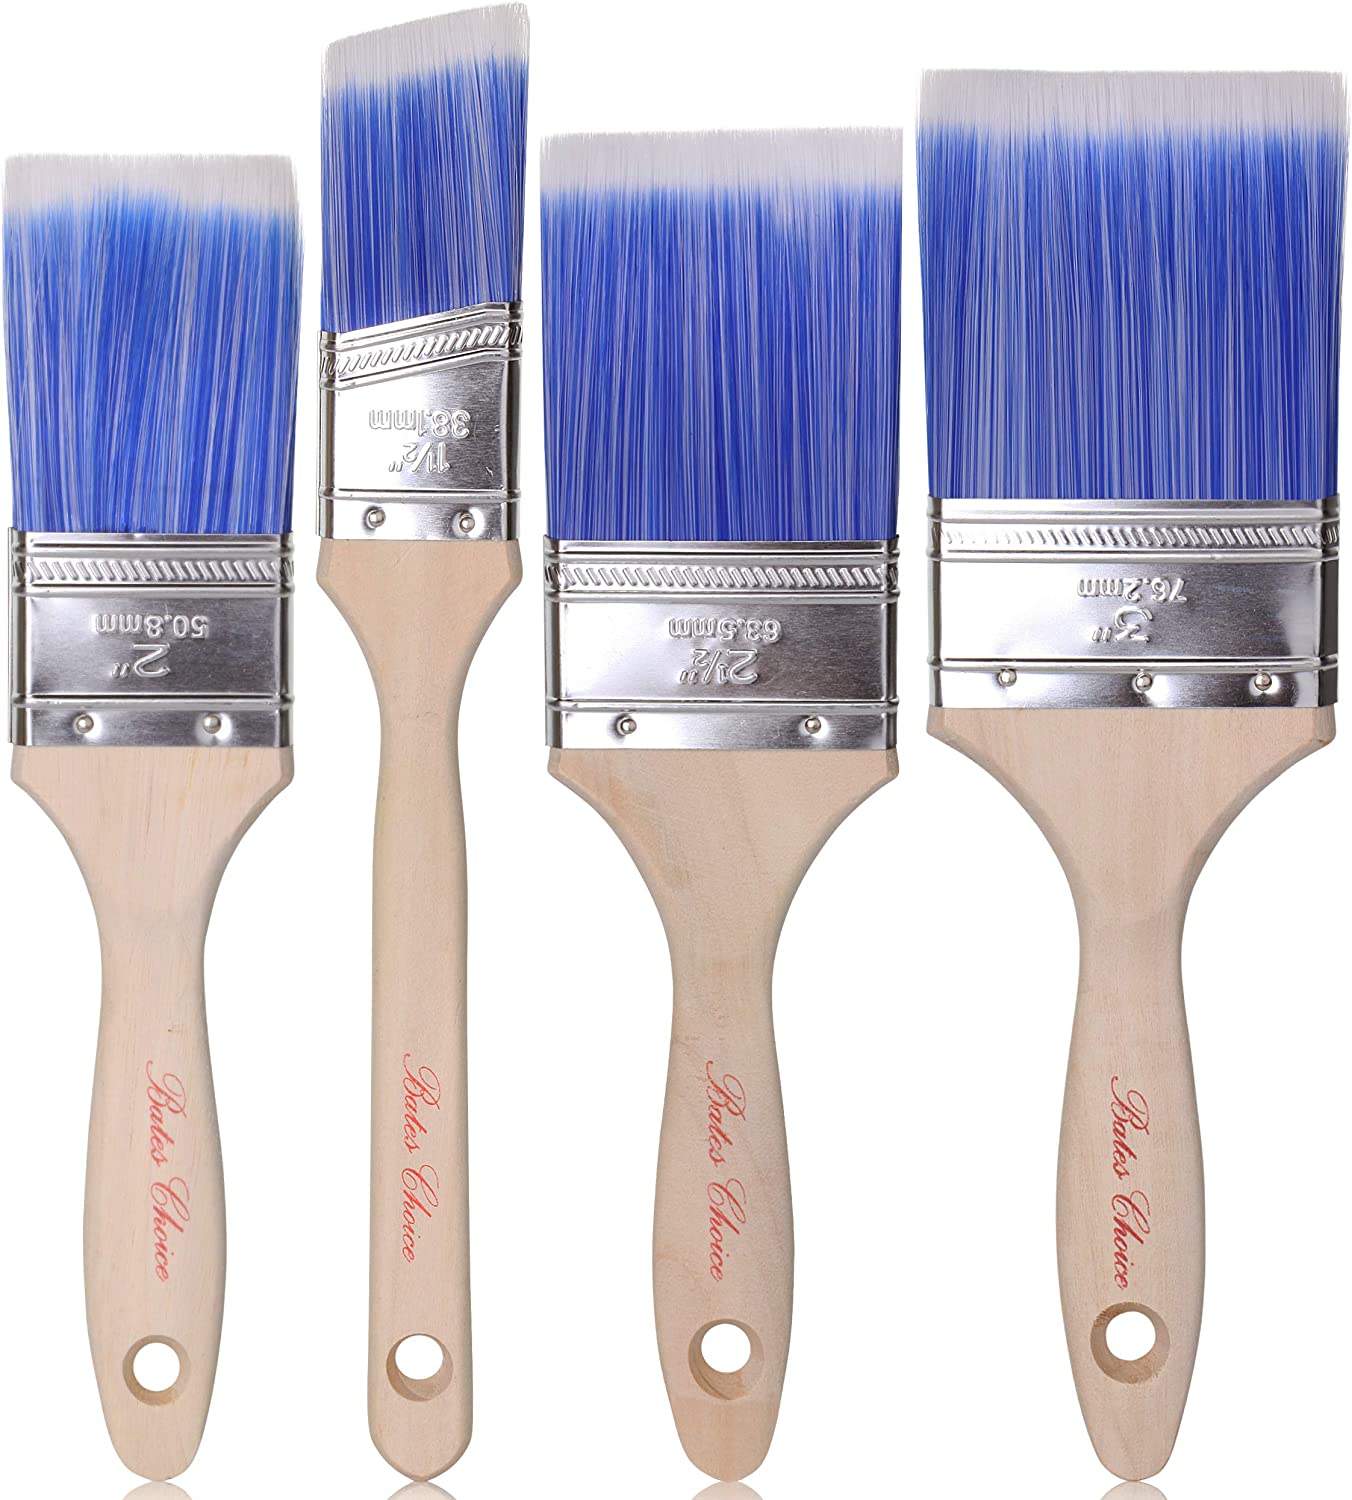 Bates Paint Brushes - 4 Pack, Treated Wood Handle, [...]